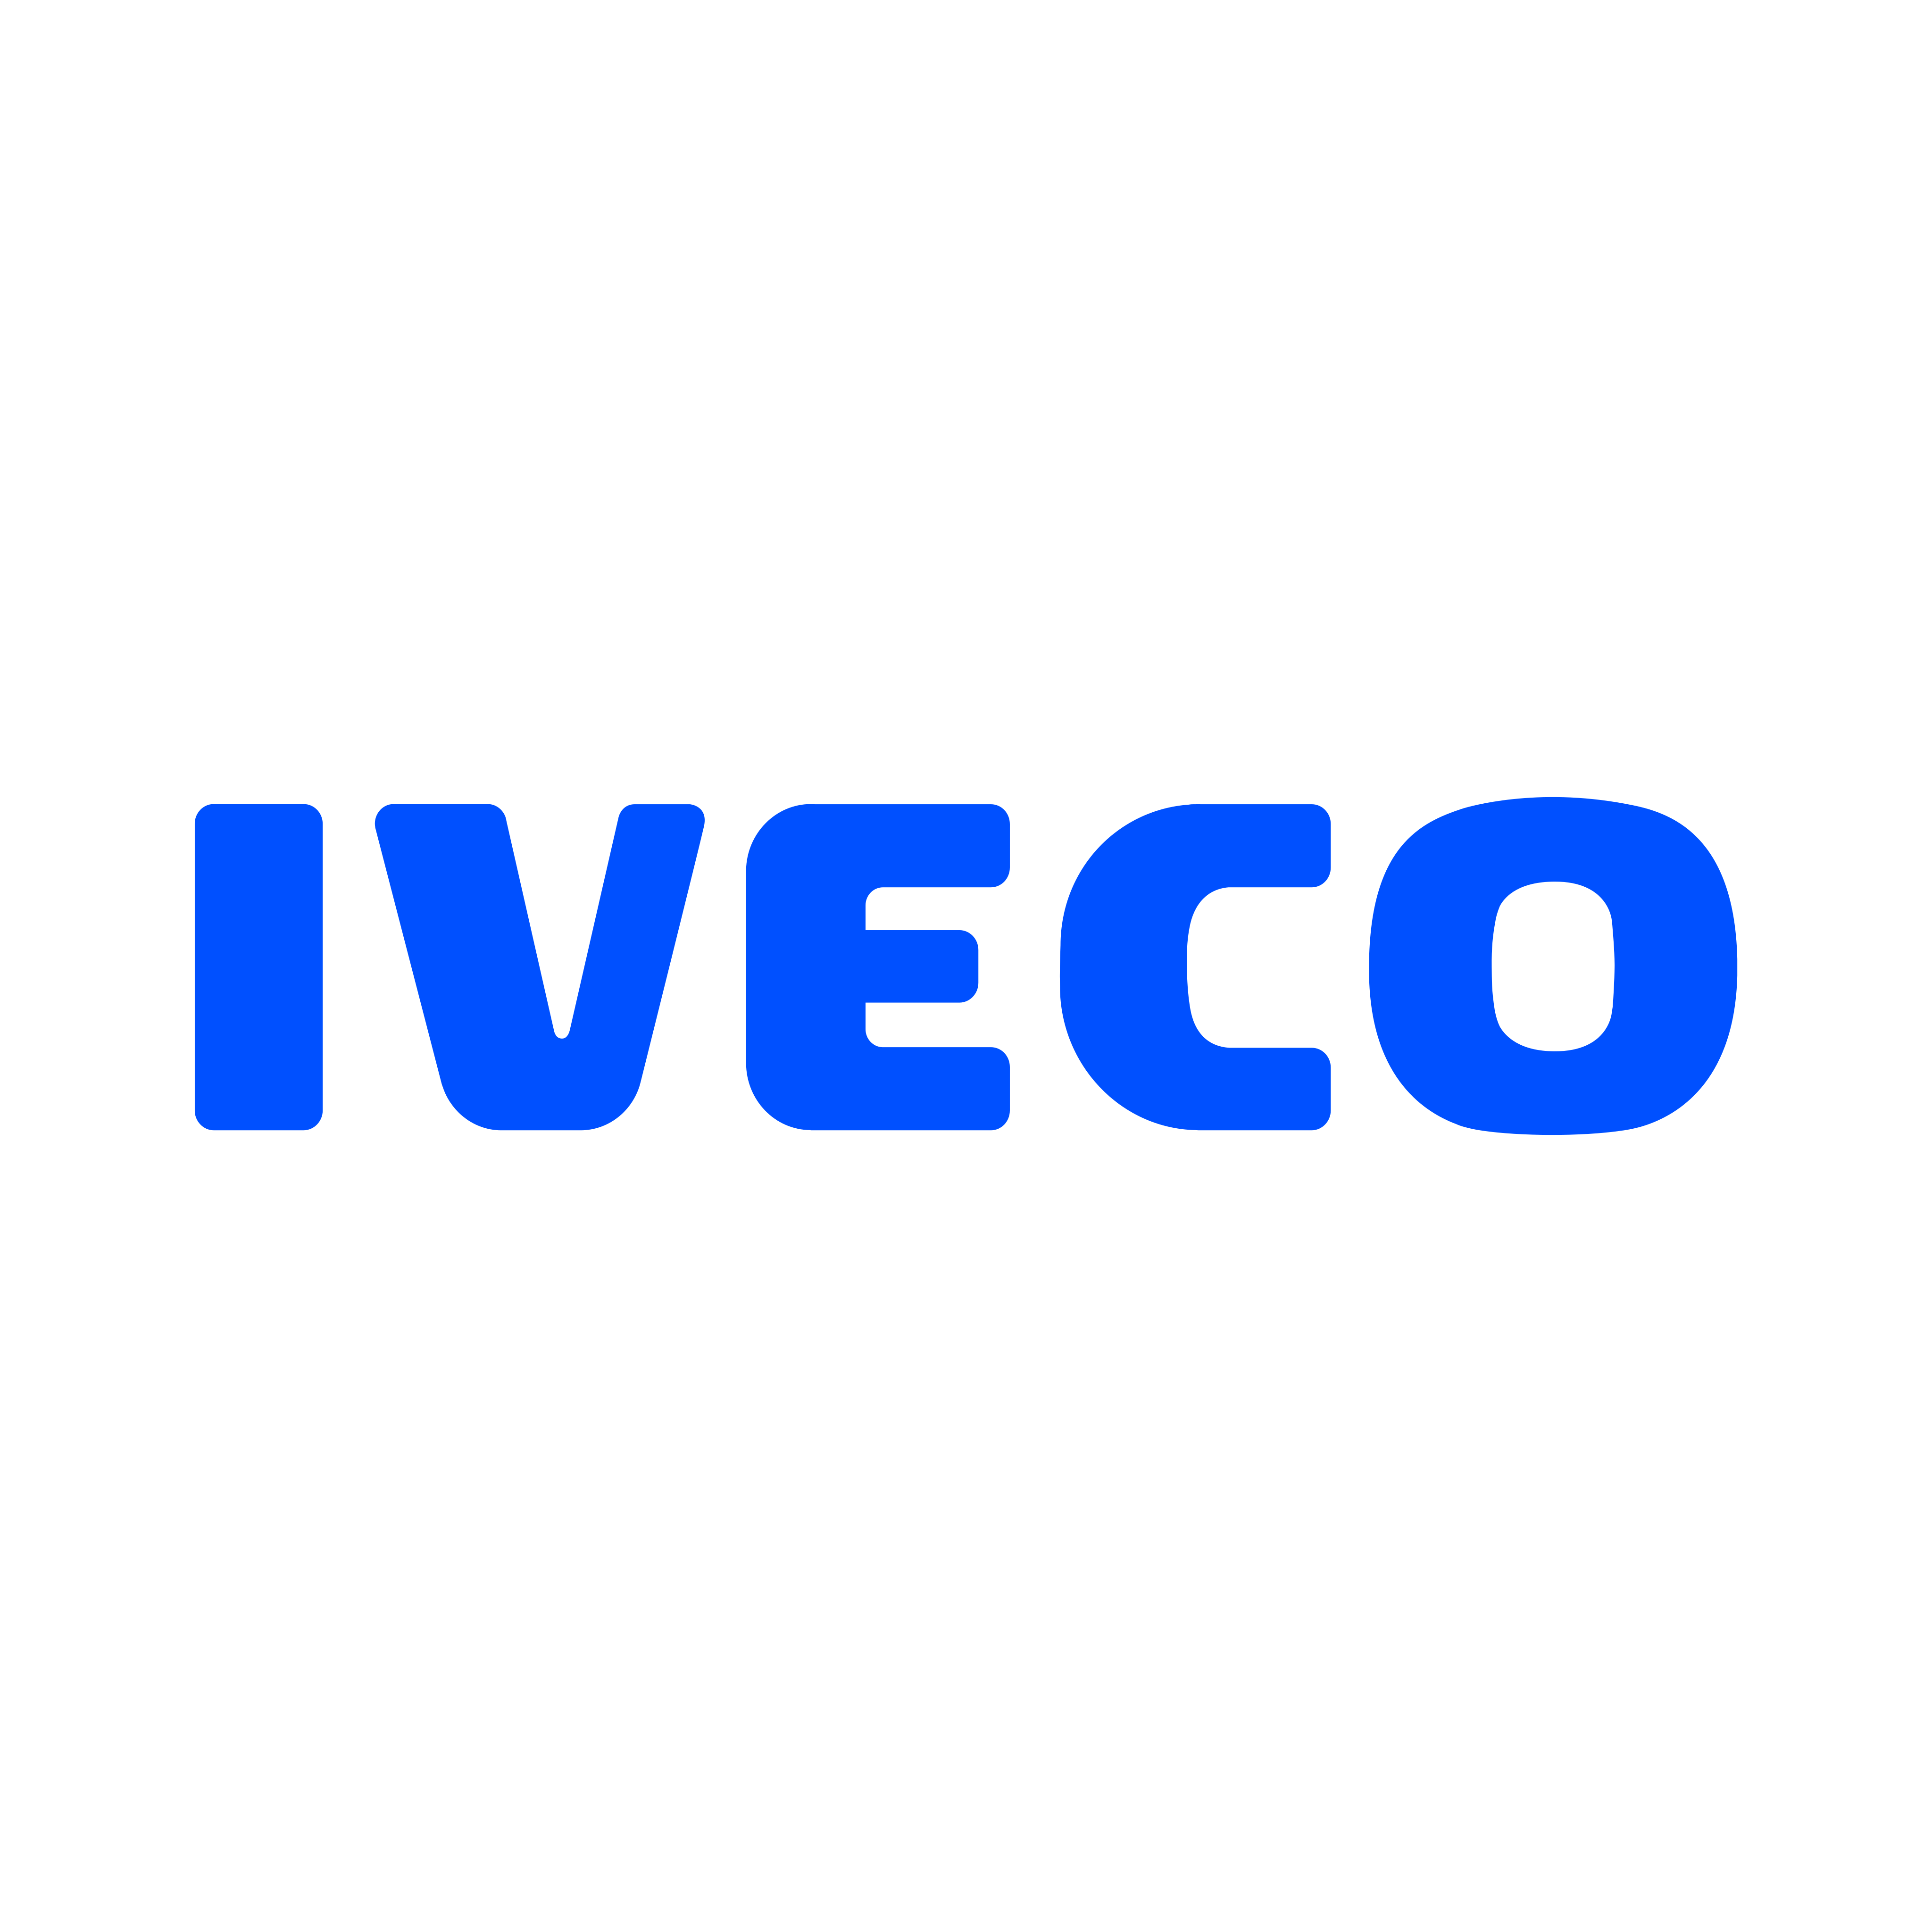 iveco logo 0 1 - Iveco Logo